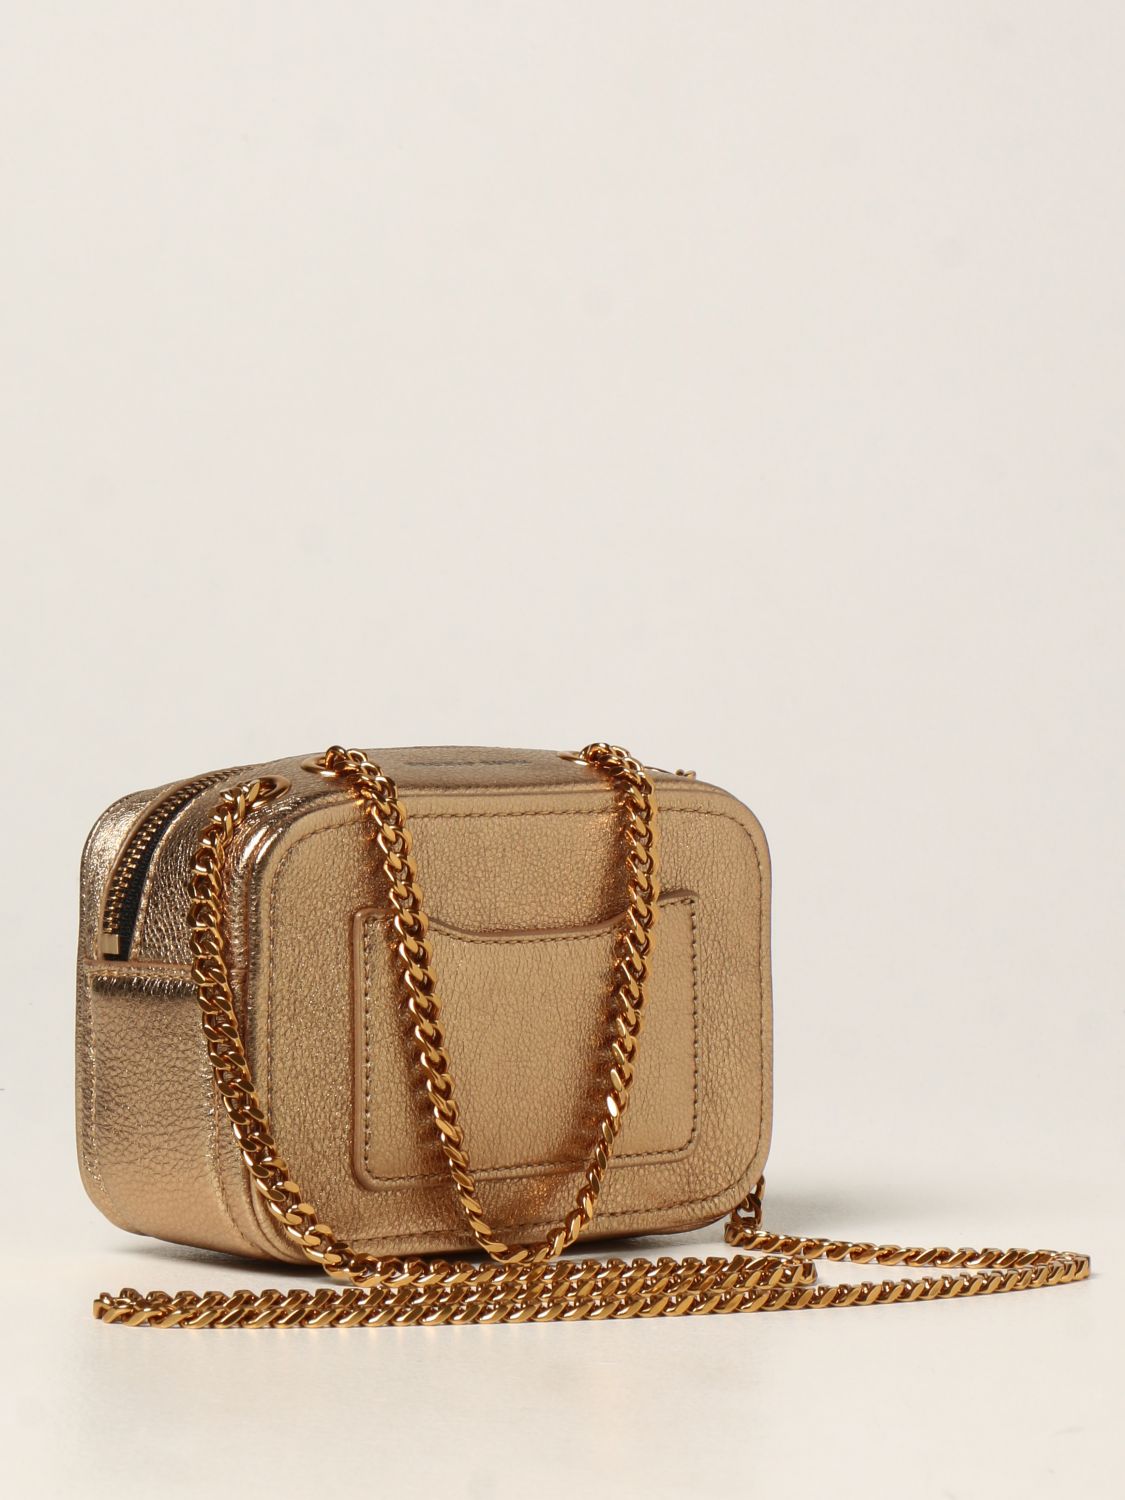 MARC JACOBS: The Glam Shot Metallic bag - Gold | Marc Jacobs mini bag